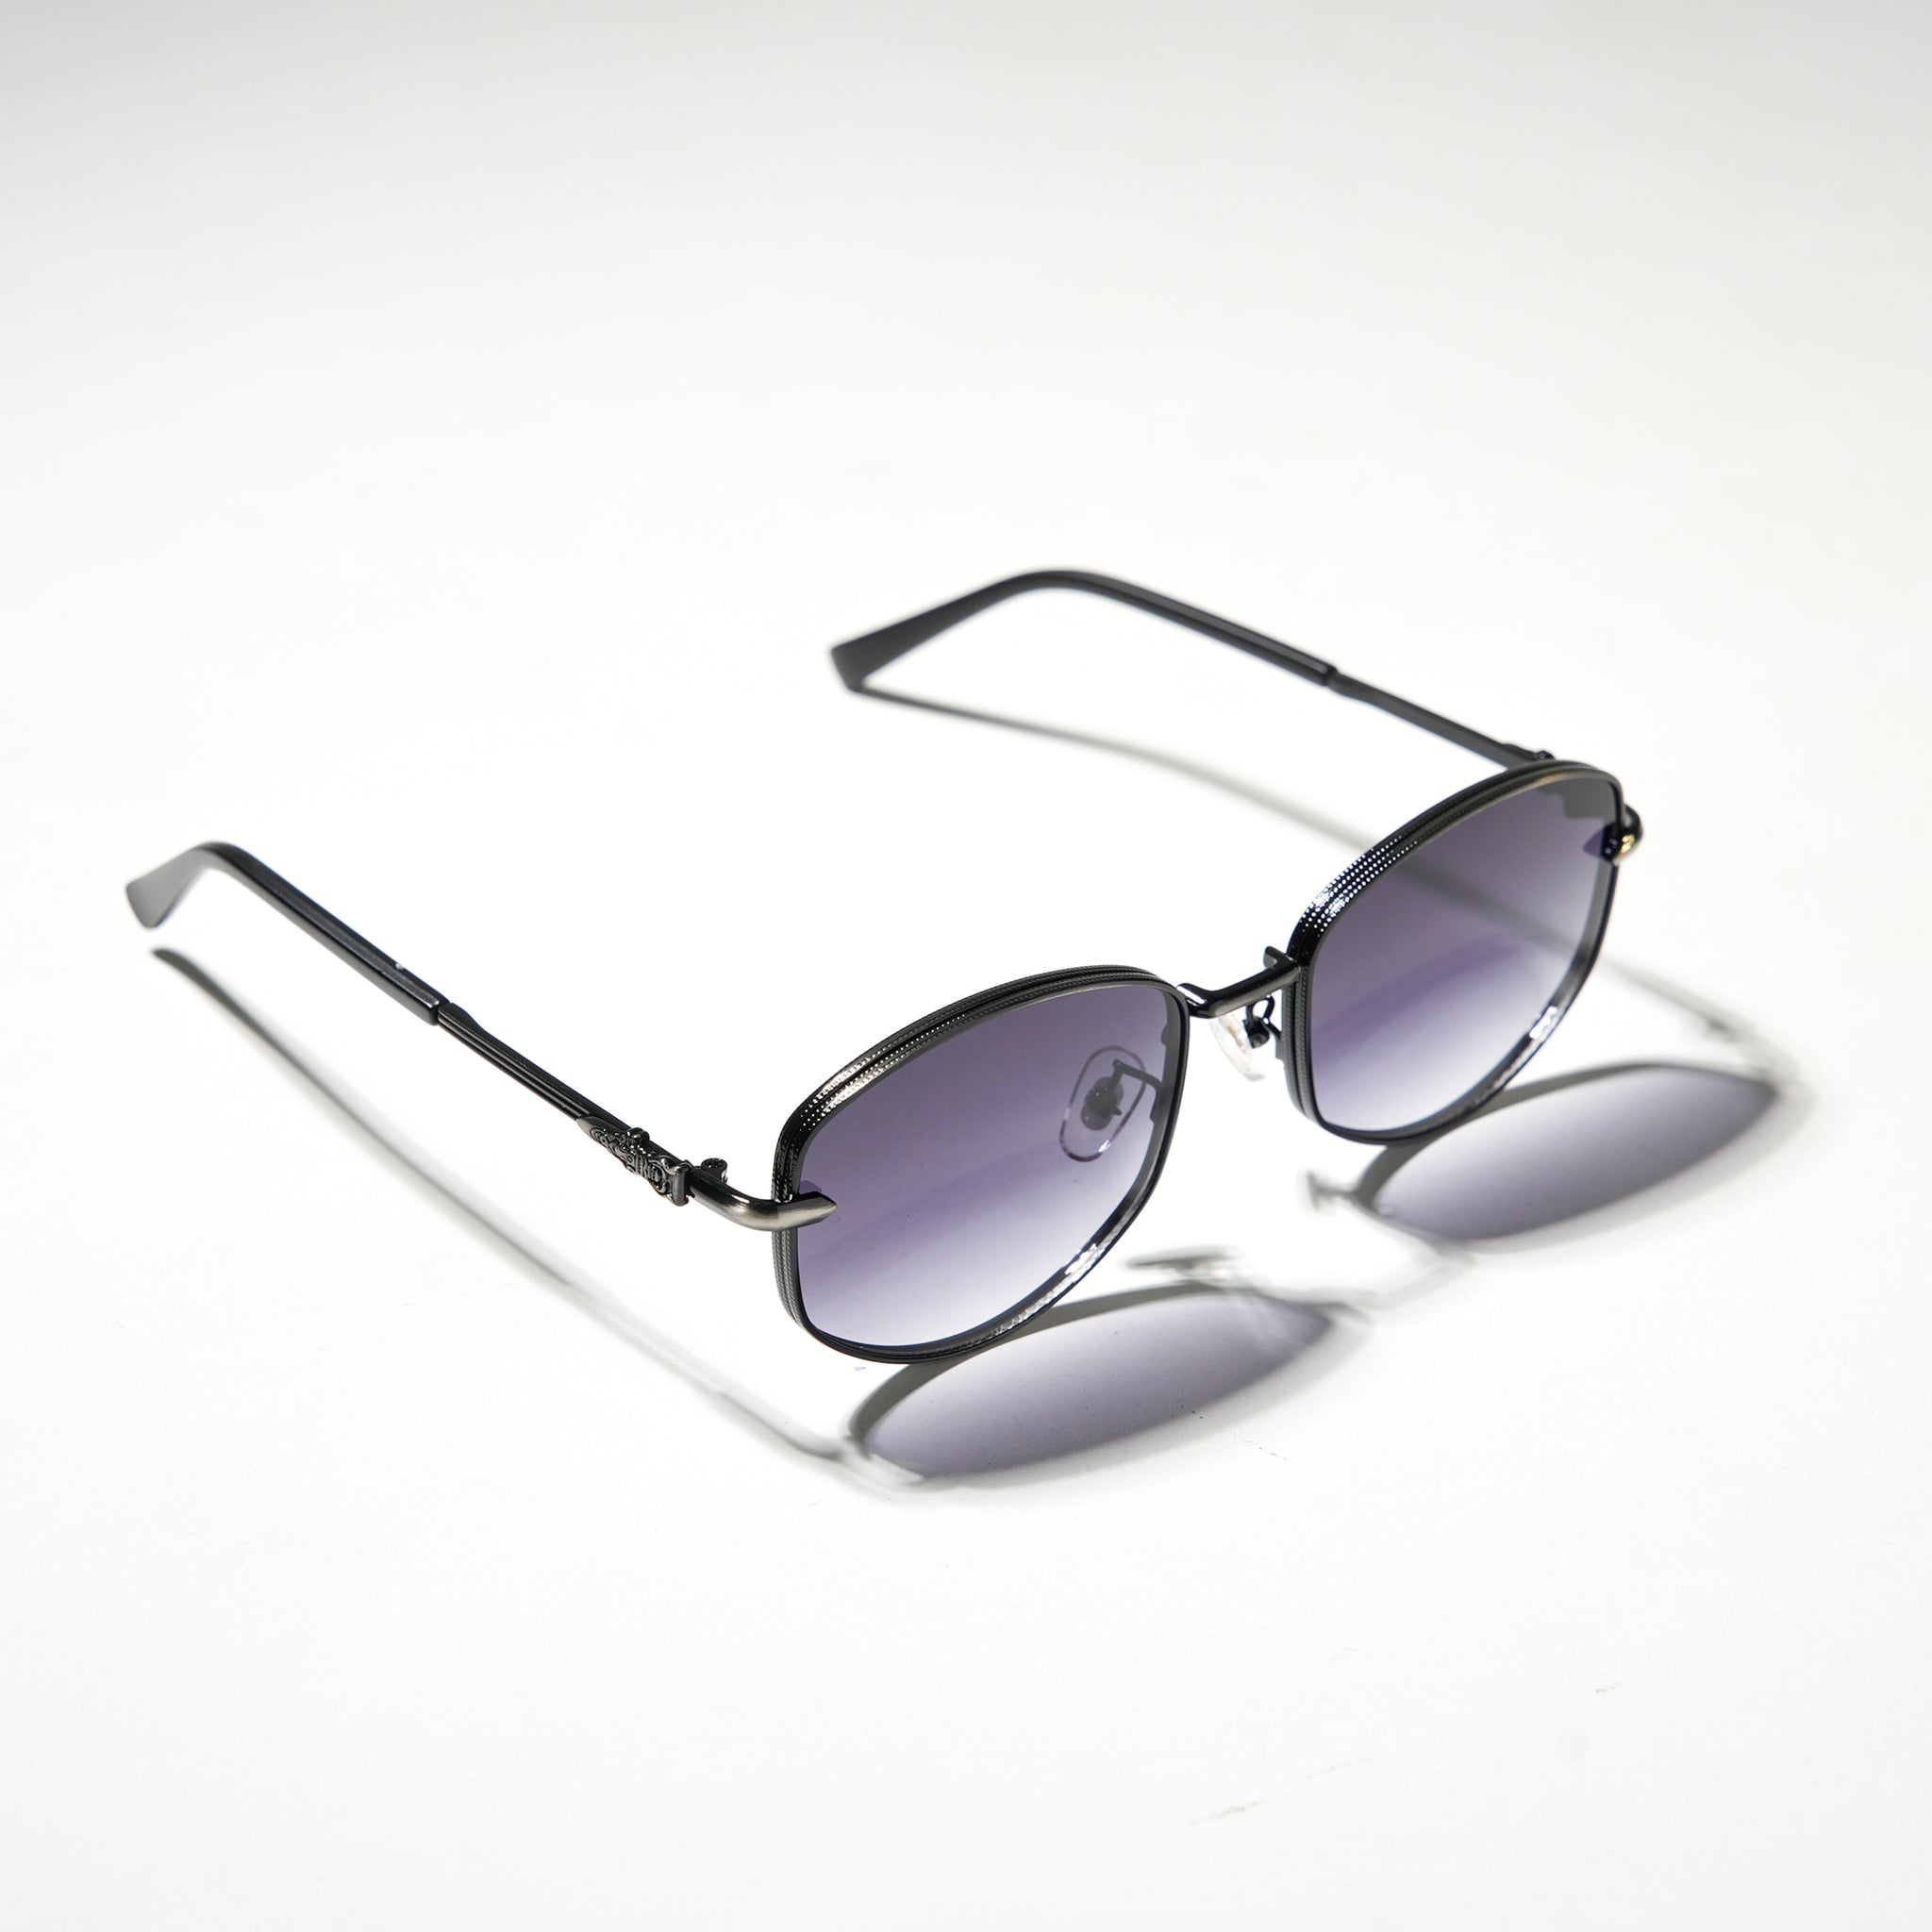 Chokore Classic Round Metal Sunglasses (Black & Gray)